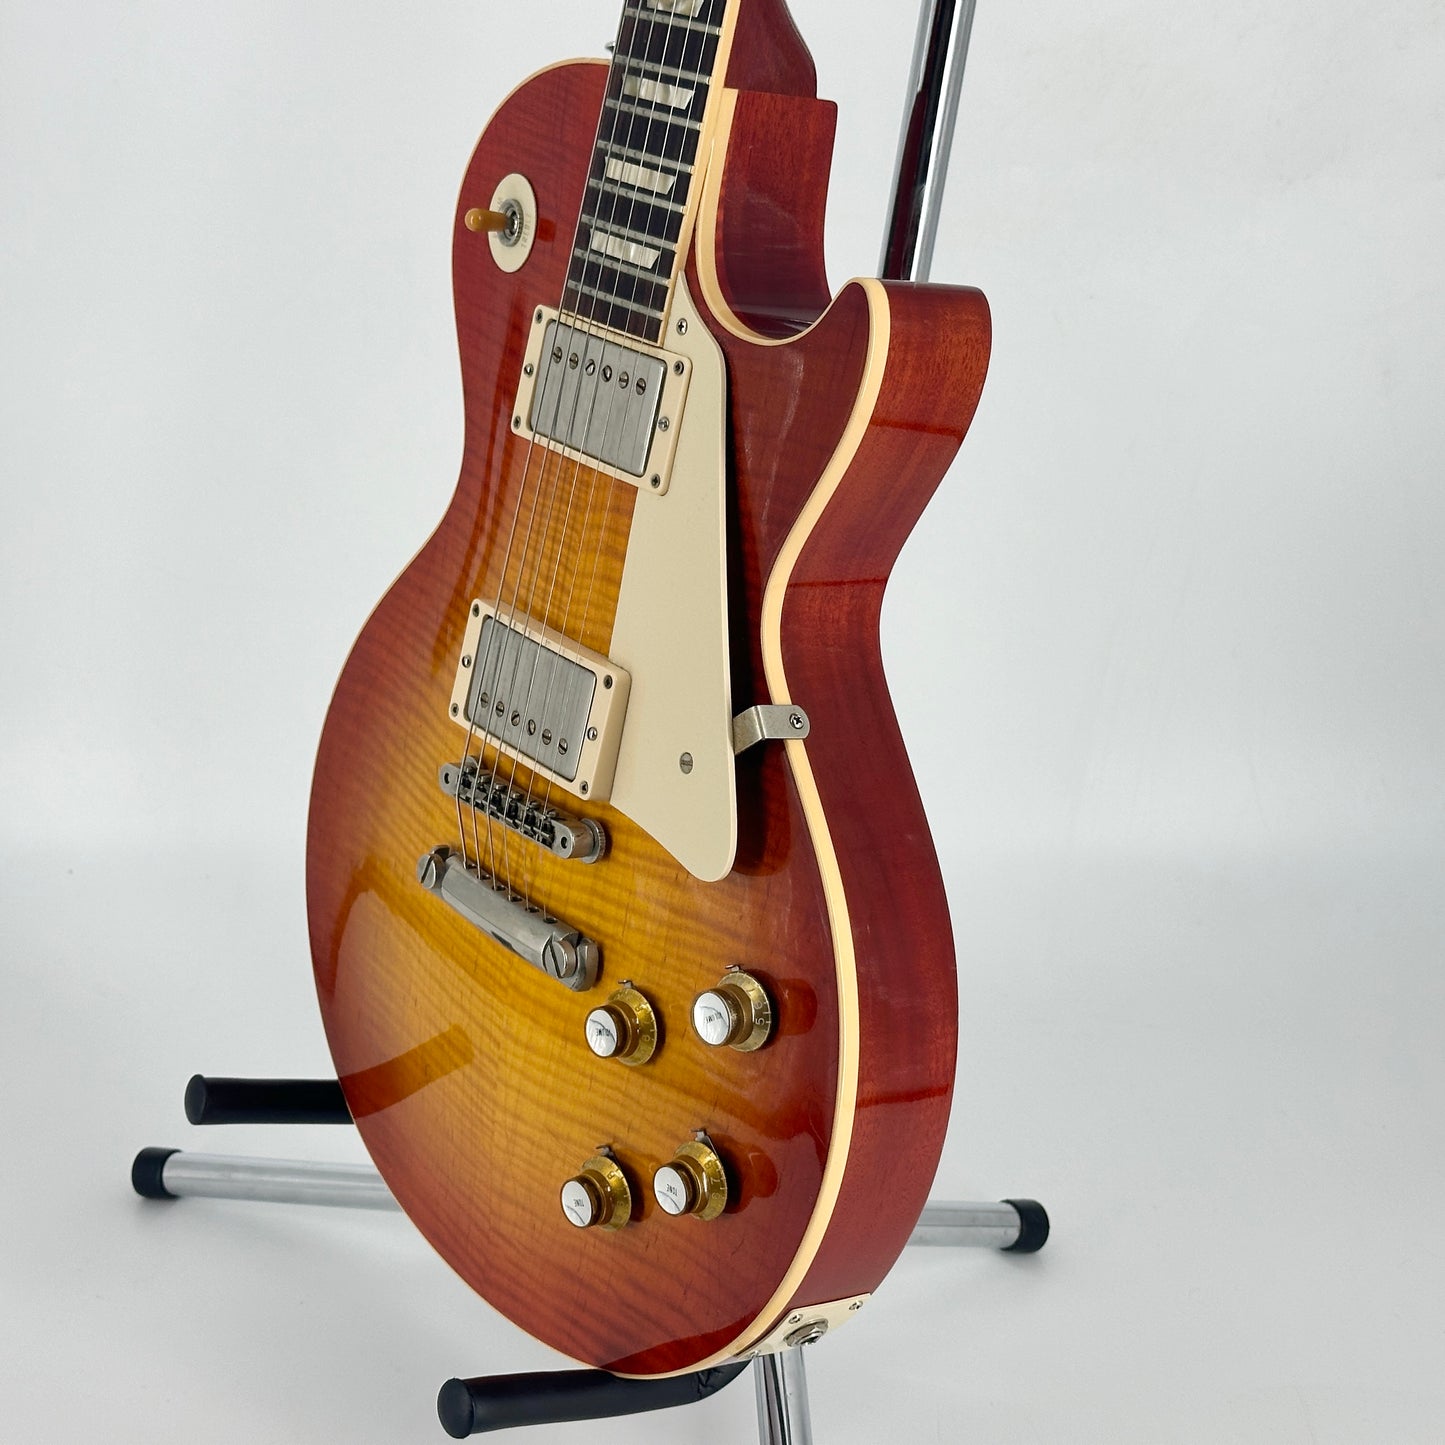 2010 Gibson Custom Shop 1960 Les Paul Reissue - Joe Bonamassa Signed - Heritage Cherry Sunburst